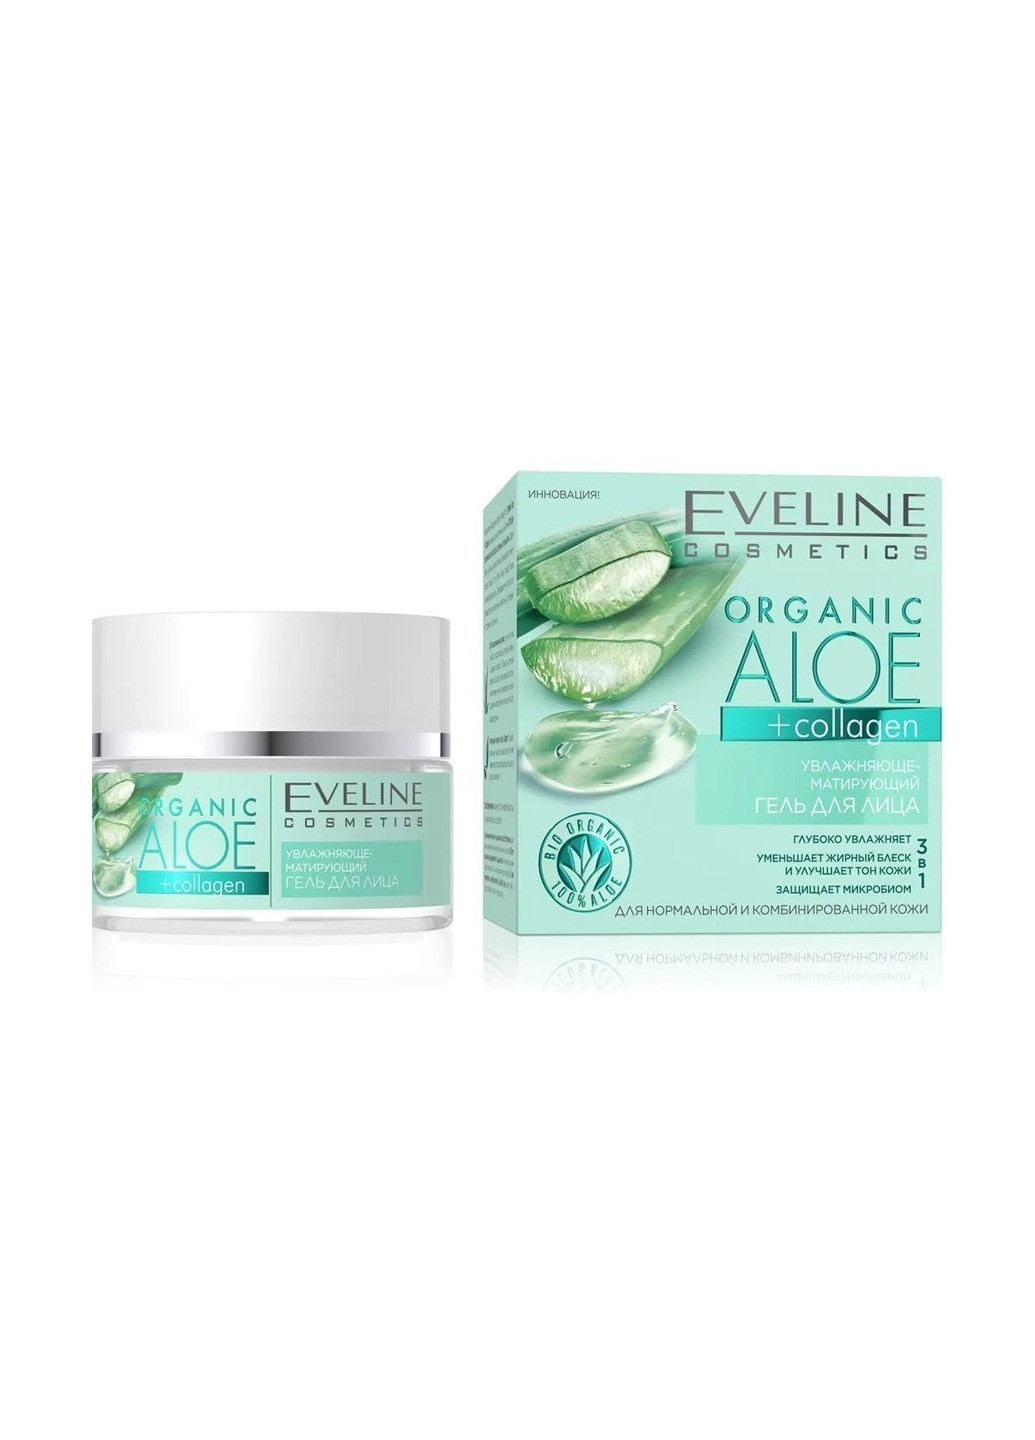 Увлажняюще-матирующий гель для лица Eveline Organic Aloe + Collagen, 50мл Eveline Cosmetics 5903416027928 (257175720)